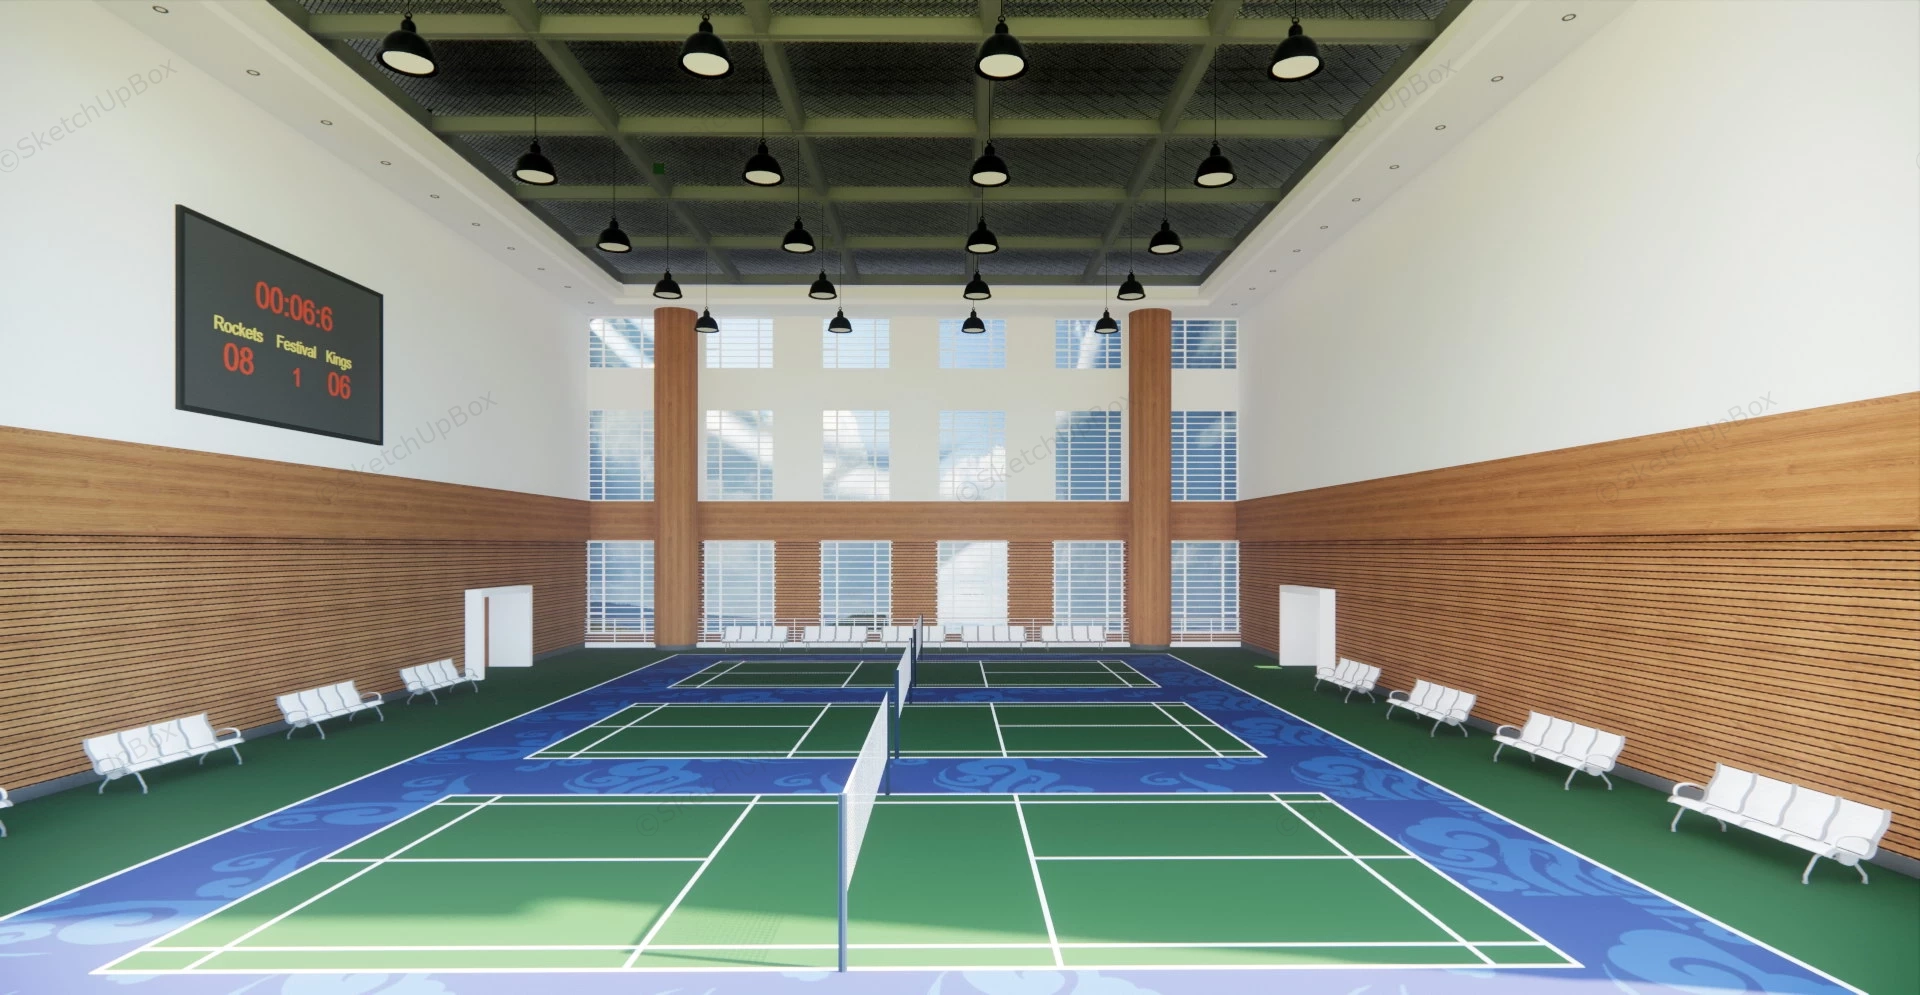 Indoor Badminton Courts sketchup model preview - SketchupBox